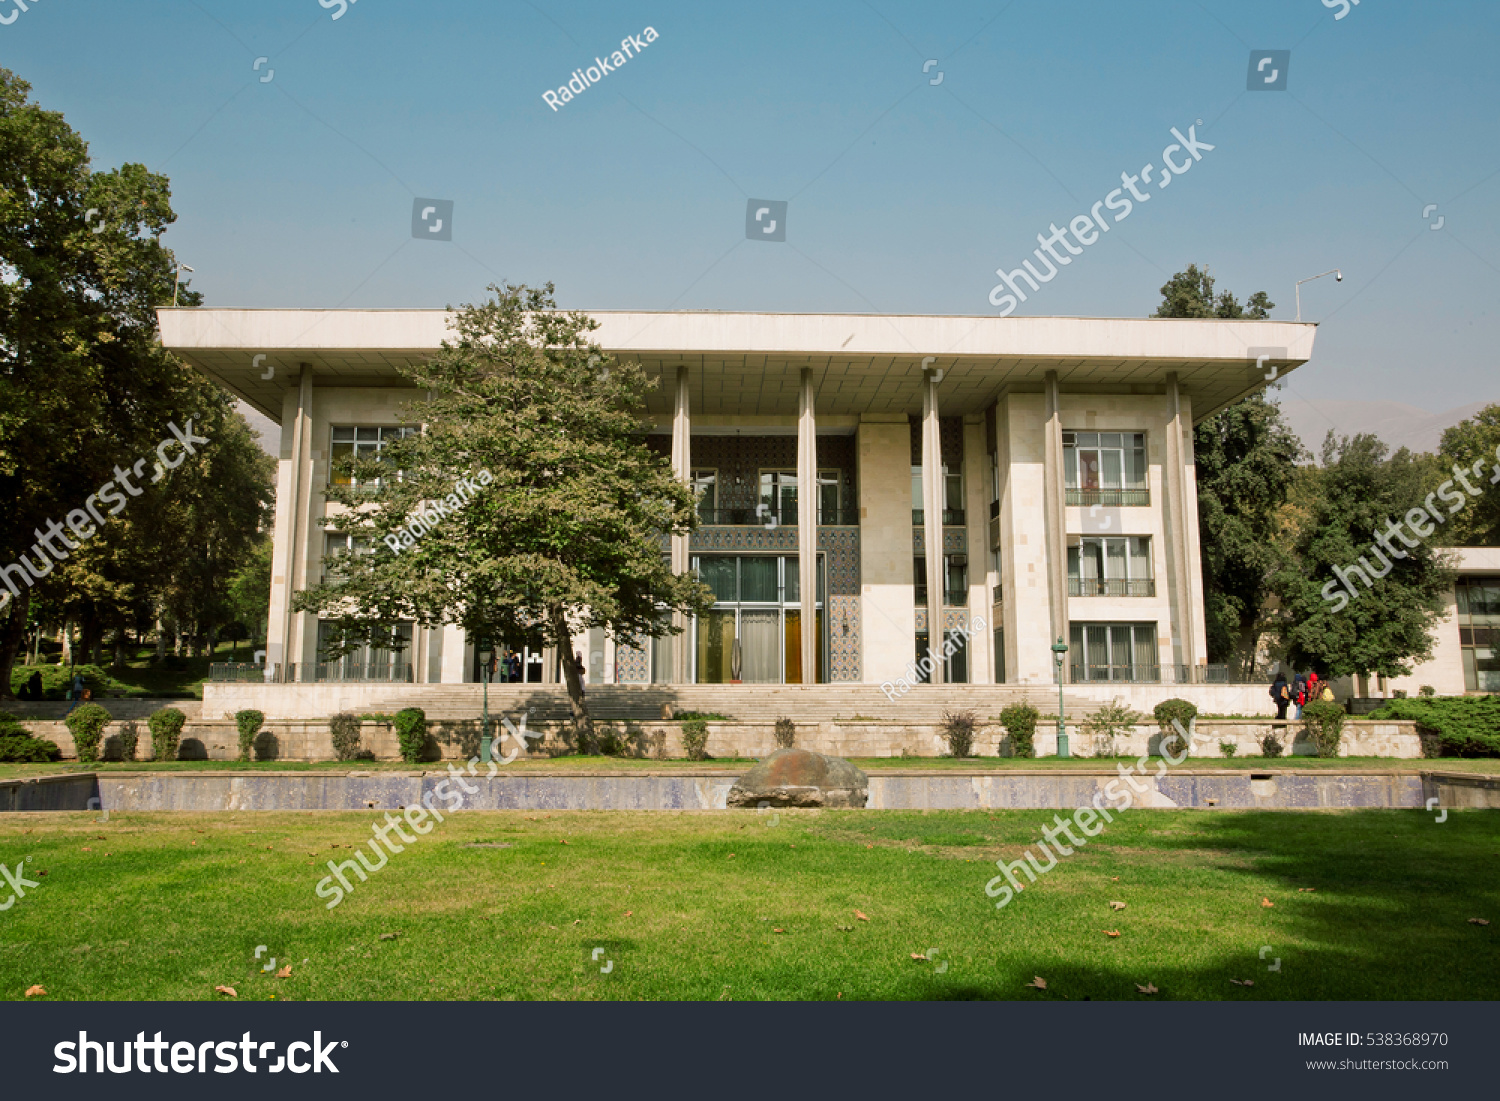 stock-photo-tehran-iran-october-park-view-with-stylish-building-of-king-s-niavaran-palace-built-in-538368970.jpg